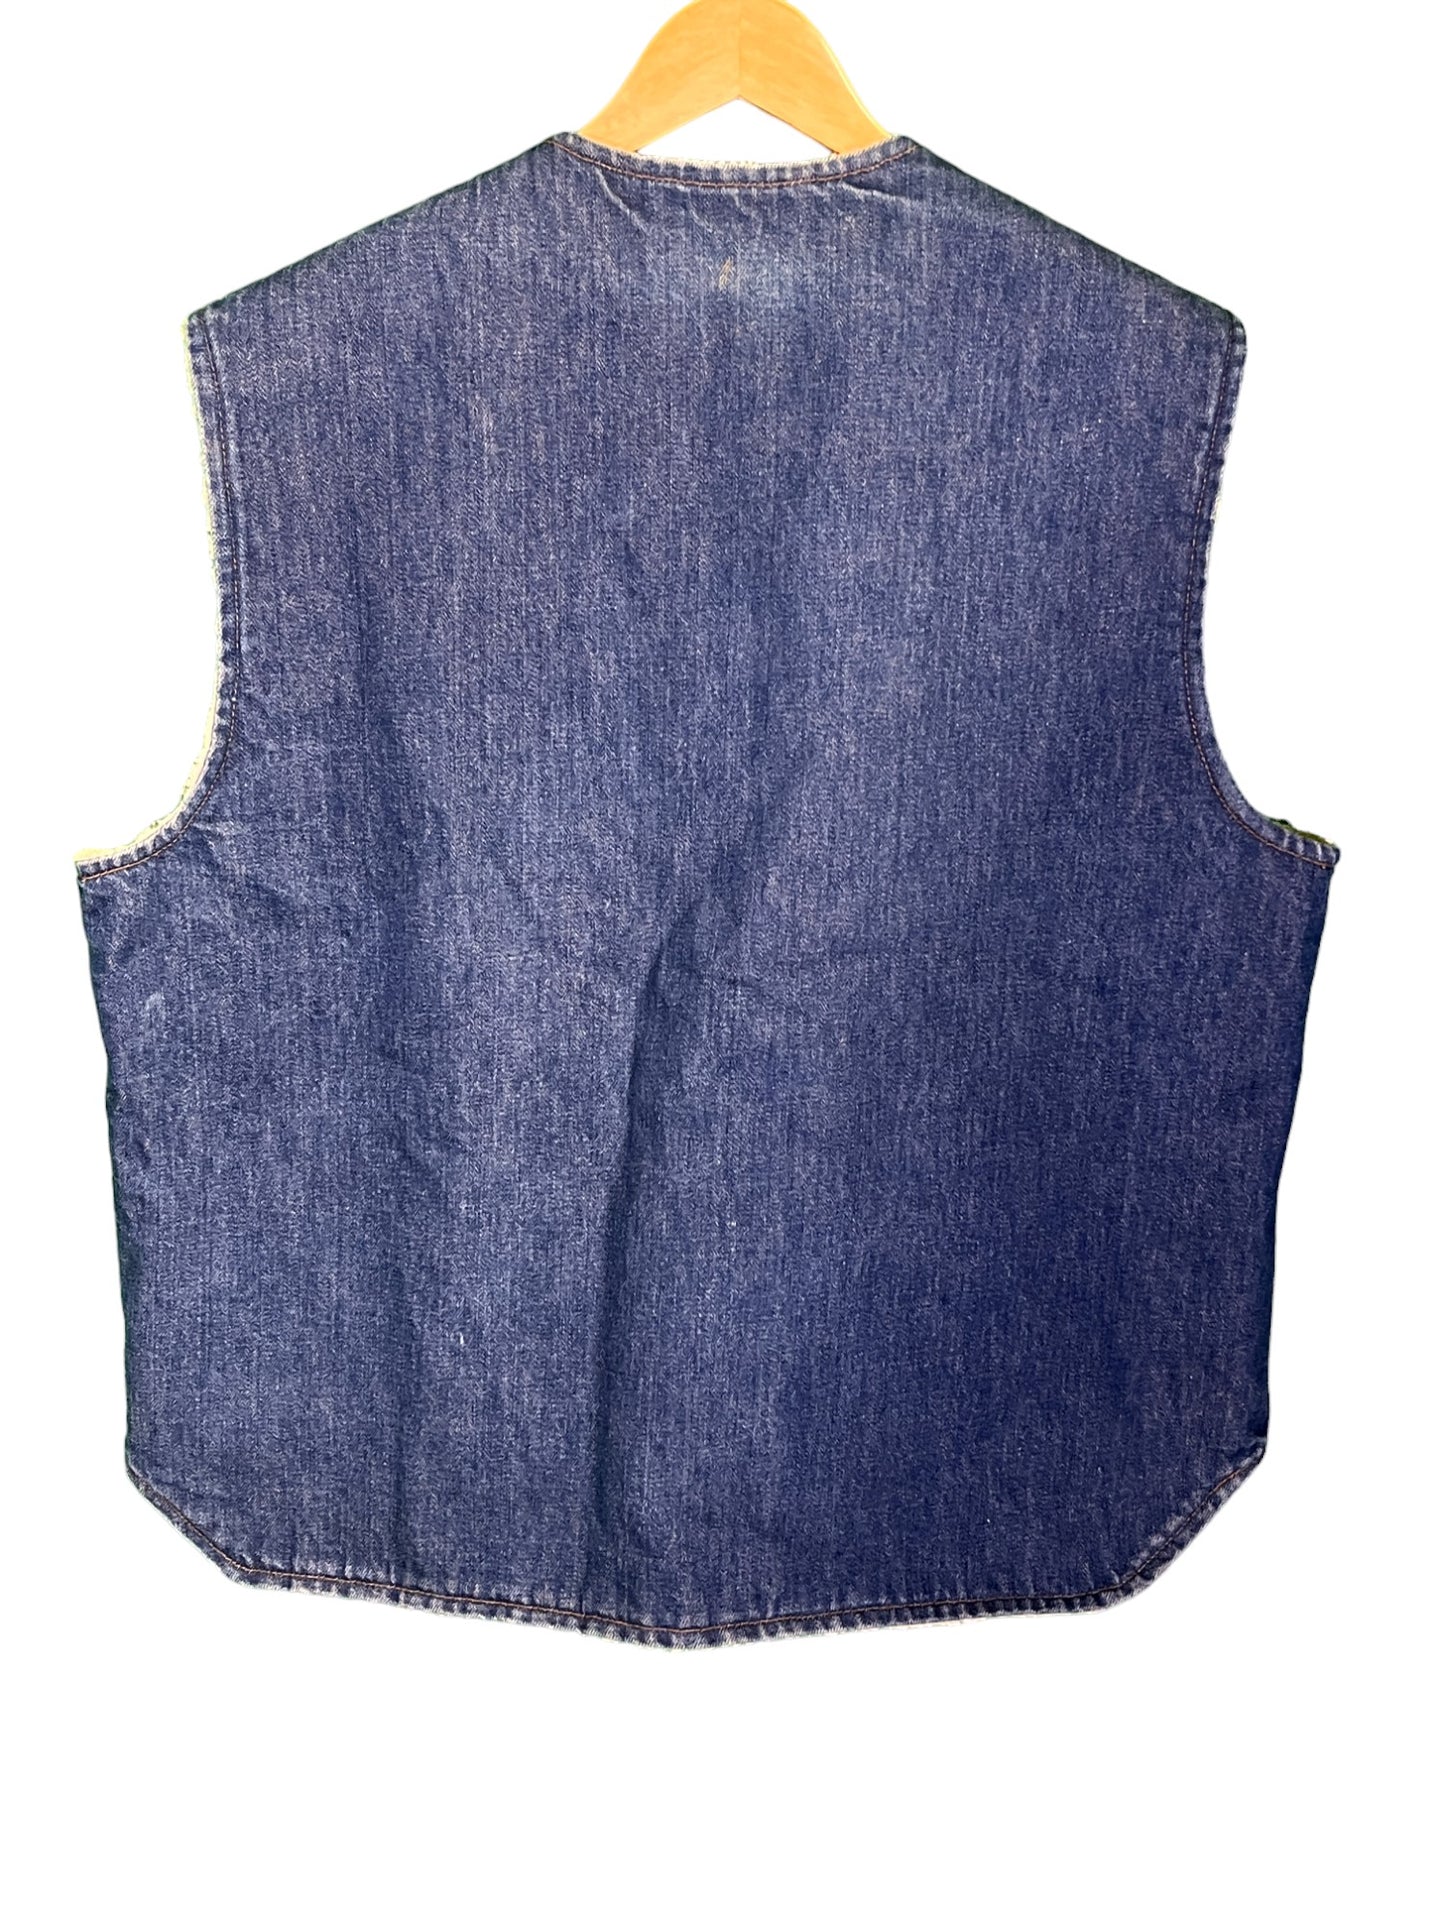 Vintage Come on Strong Brand Sherpa Lined Denim Work Vest Size XL